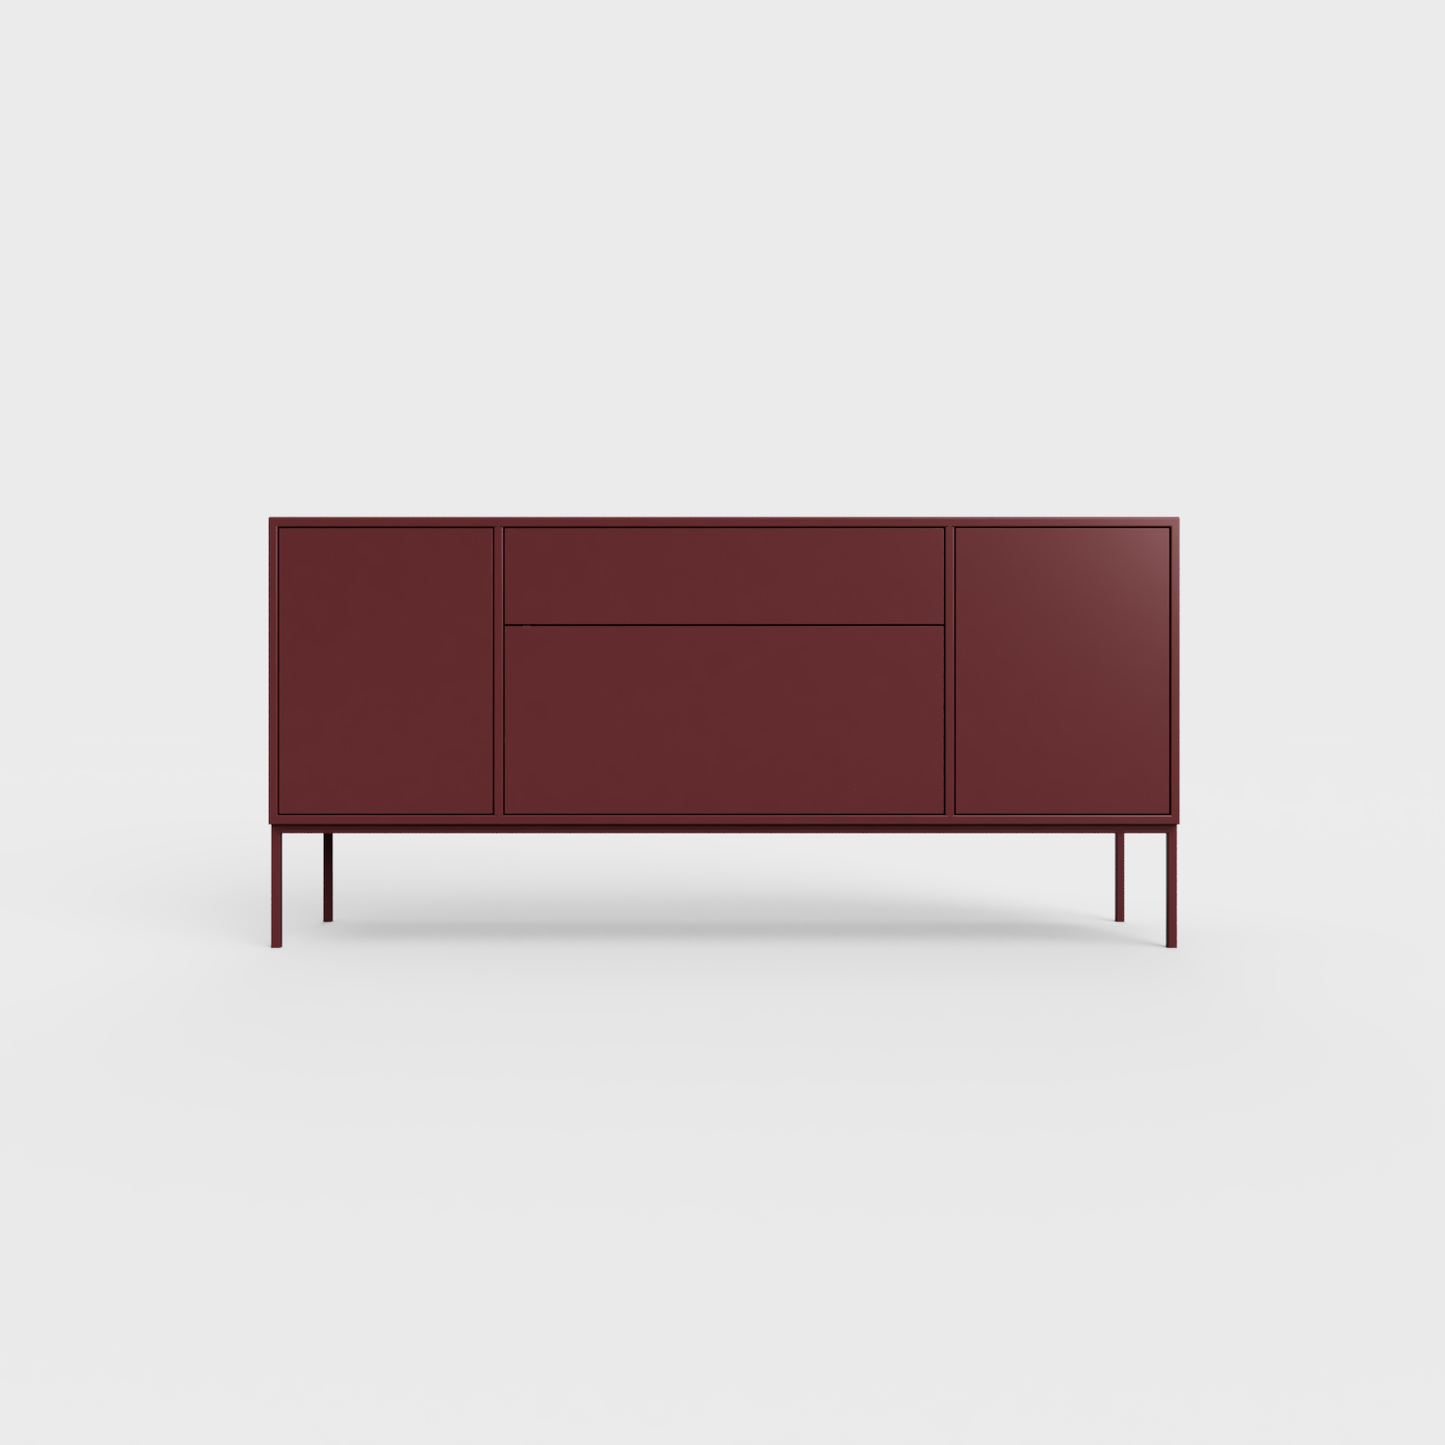 Arnika 02 Sideboard in Burgundy color, powder-coated steel, elegant and modern piece of furniture for your living room